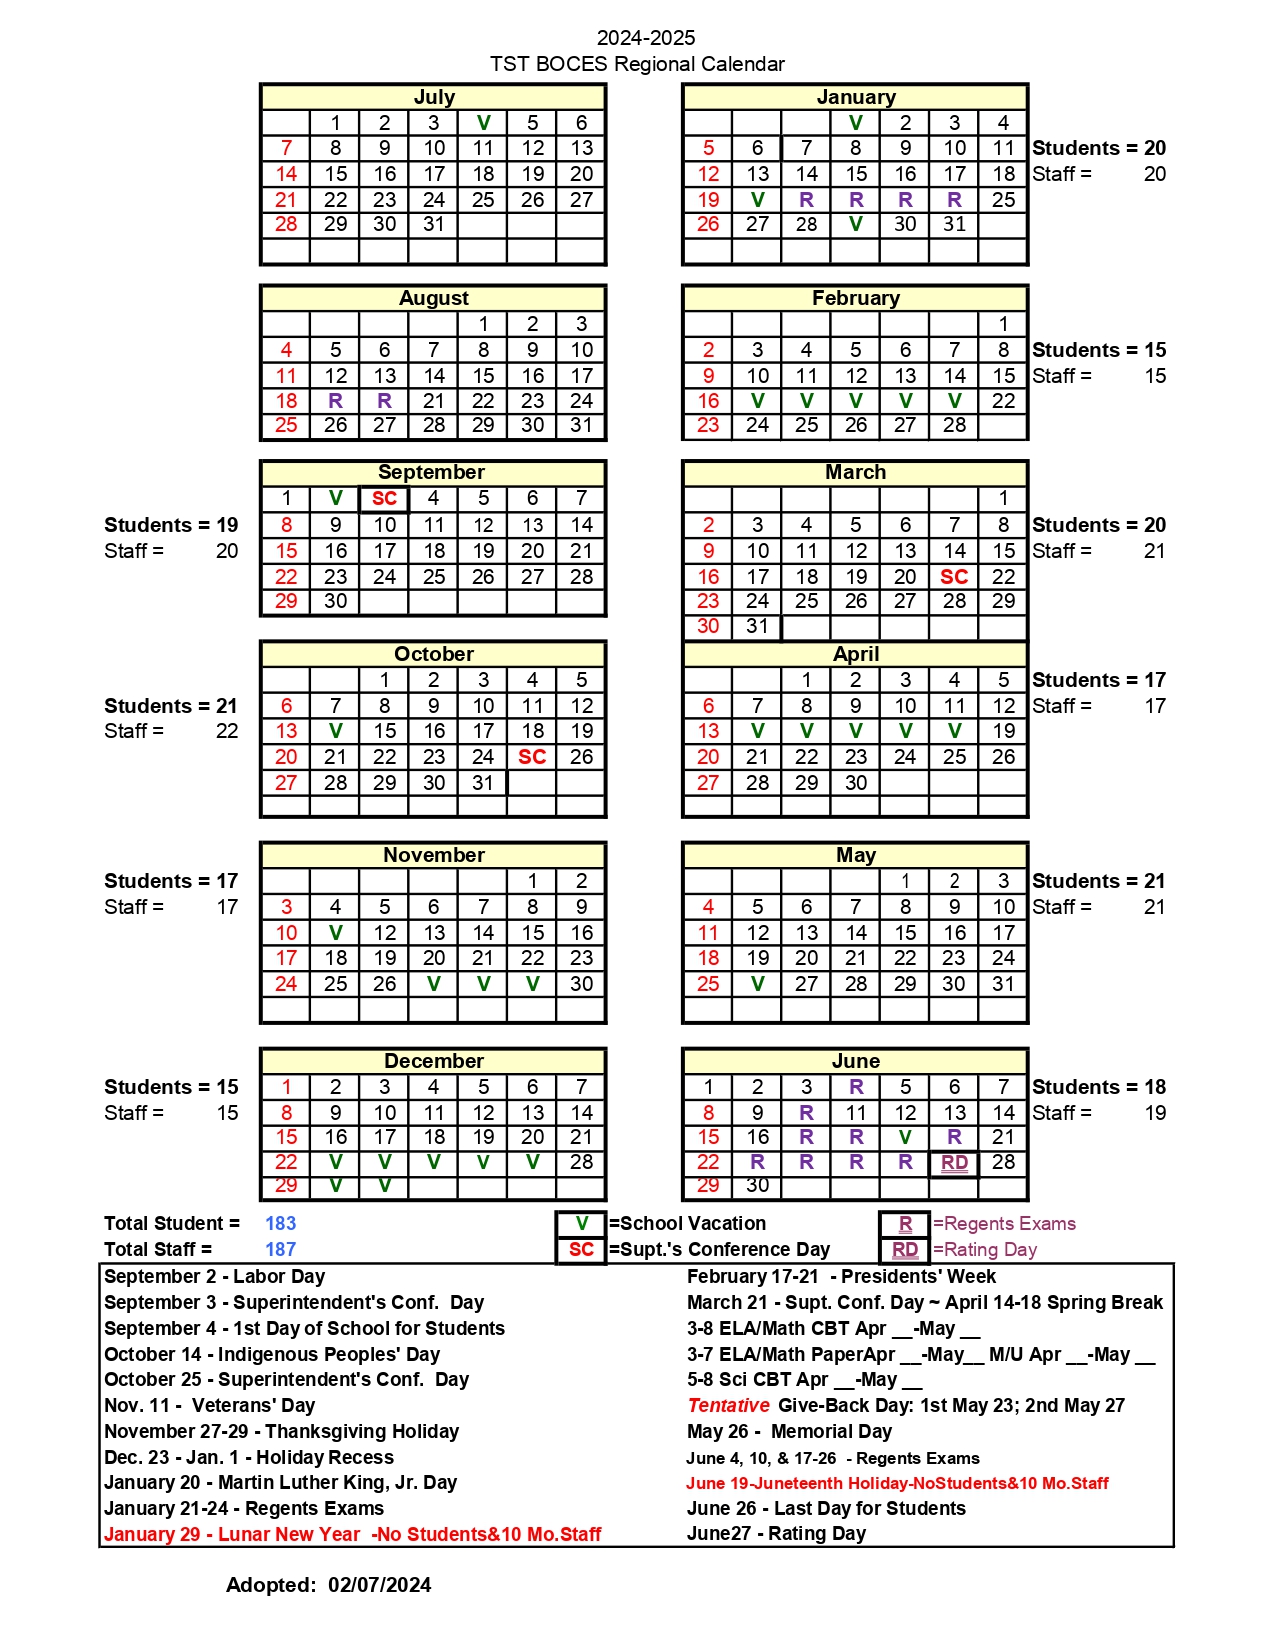 Calendar TST BOCES